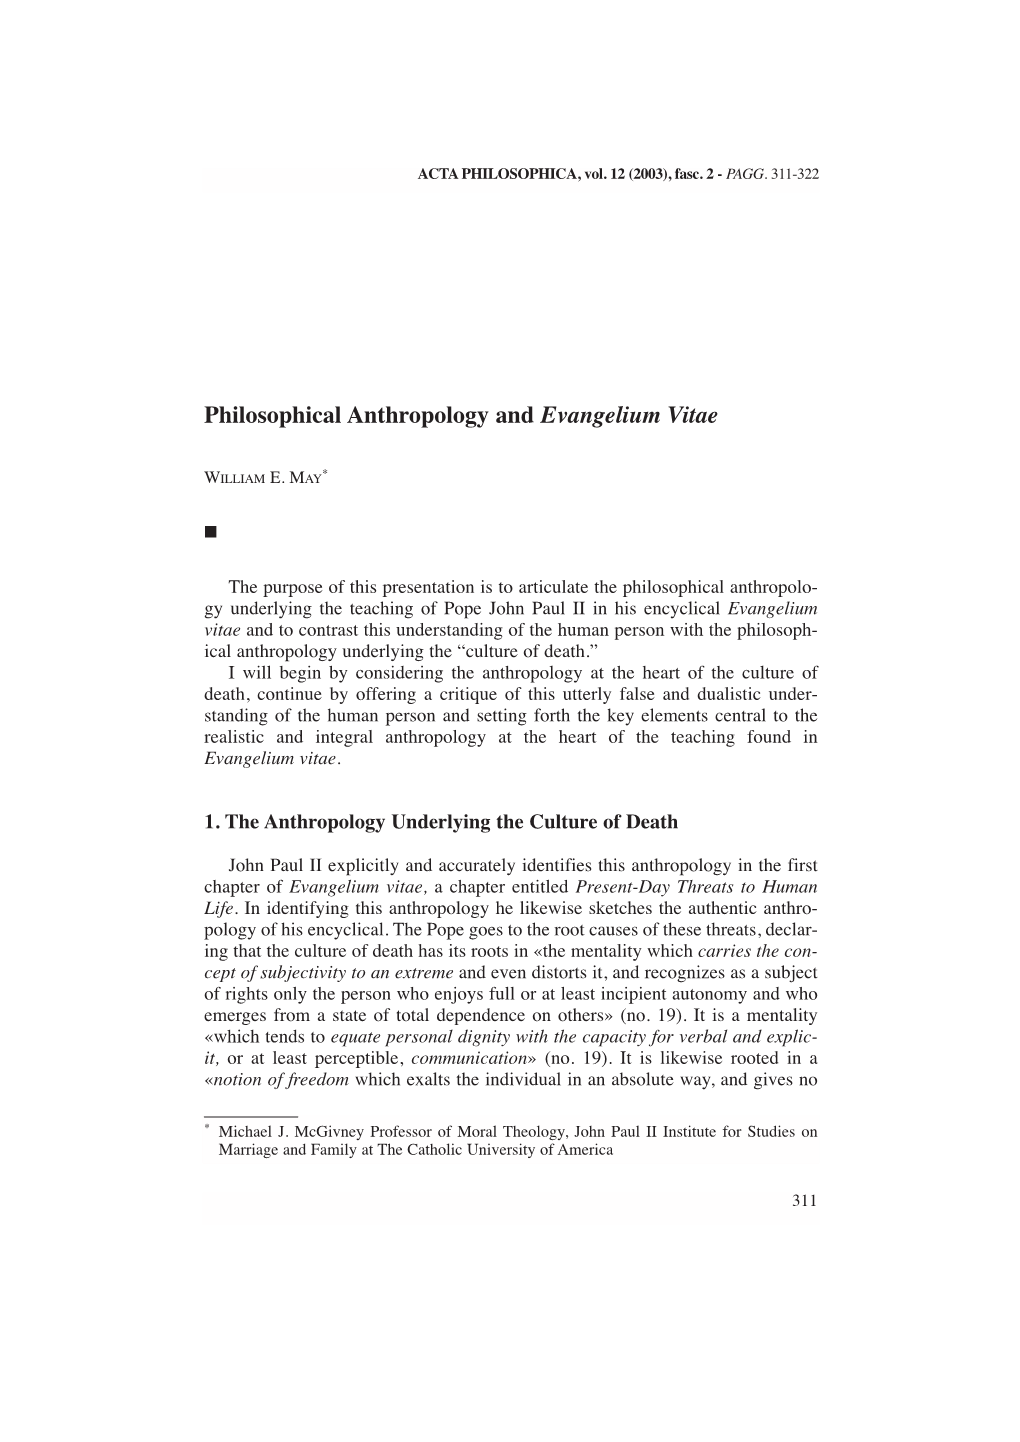 Philosophical Anthropology and Evangelium Vitae